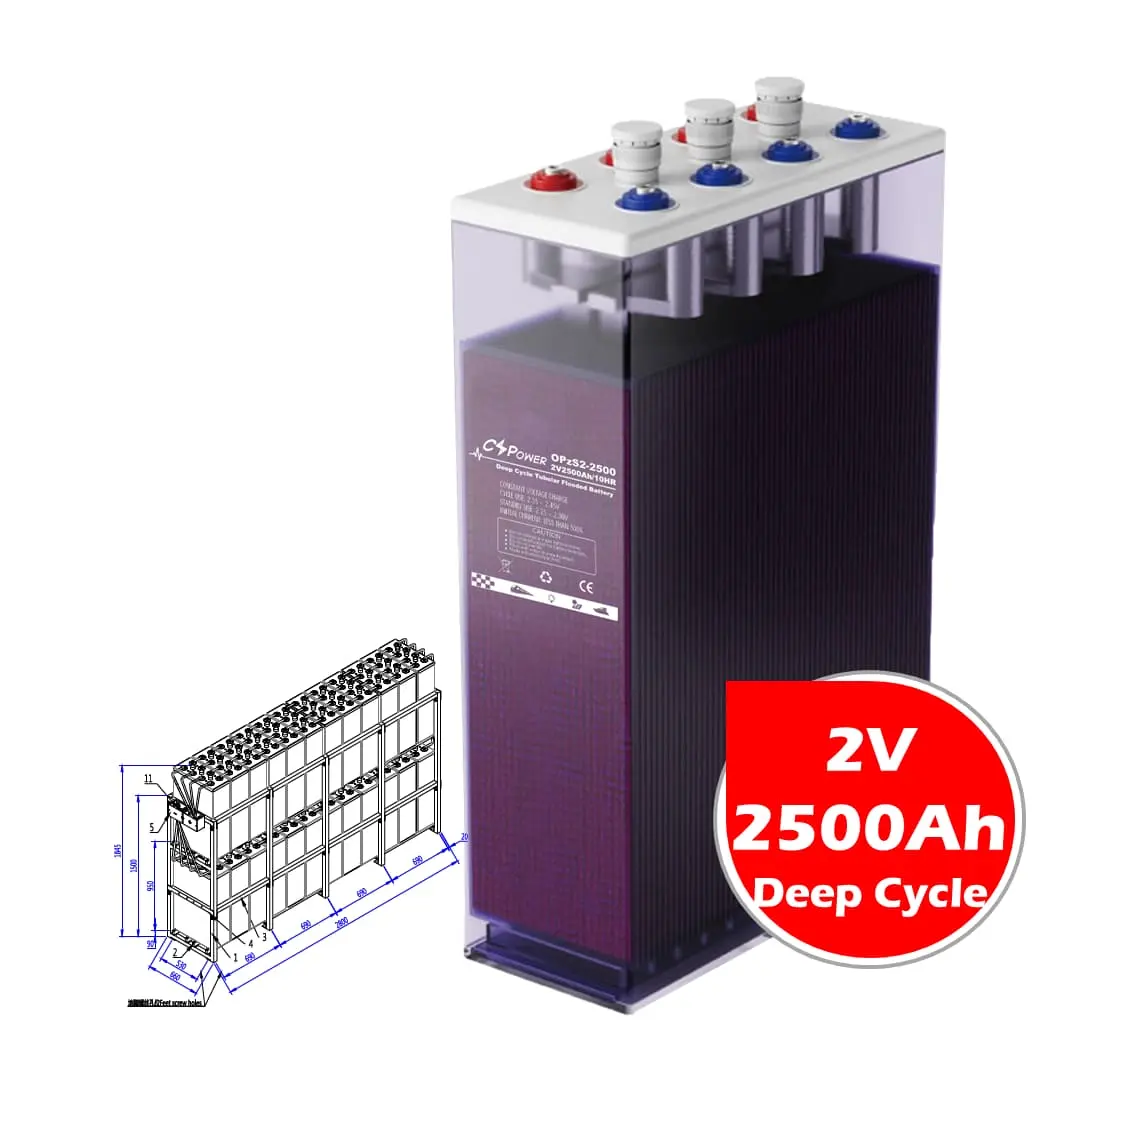 CSPower baterai OPzS tabung suhu tinggi 2V 2500Ah untuk inverter tenaga surya pabrik Tiongkok OPzV2-2500 24OPzS2500 VS Leoch RIT